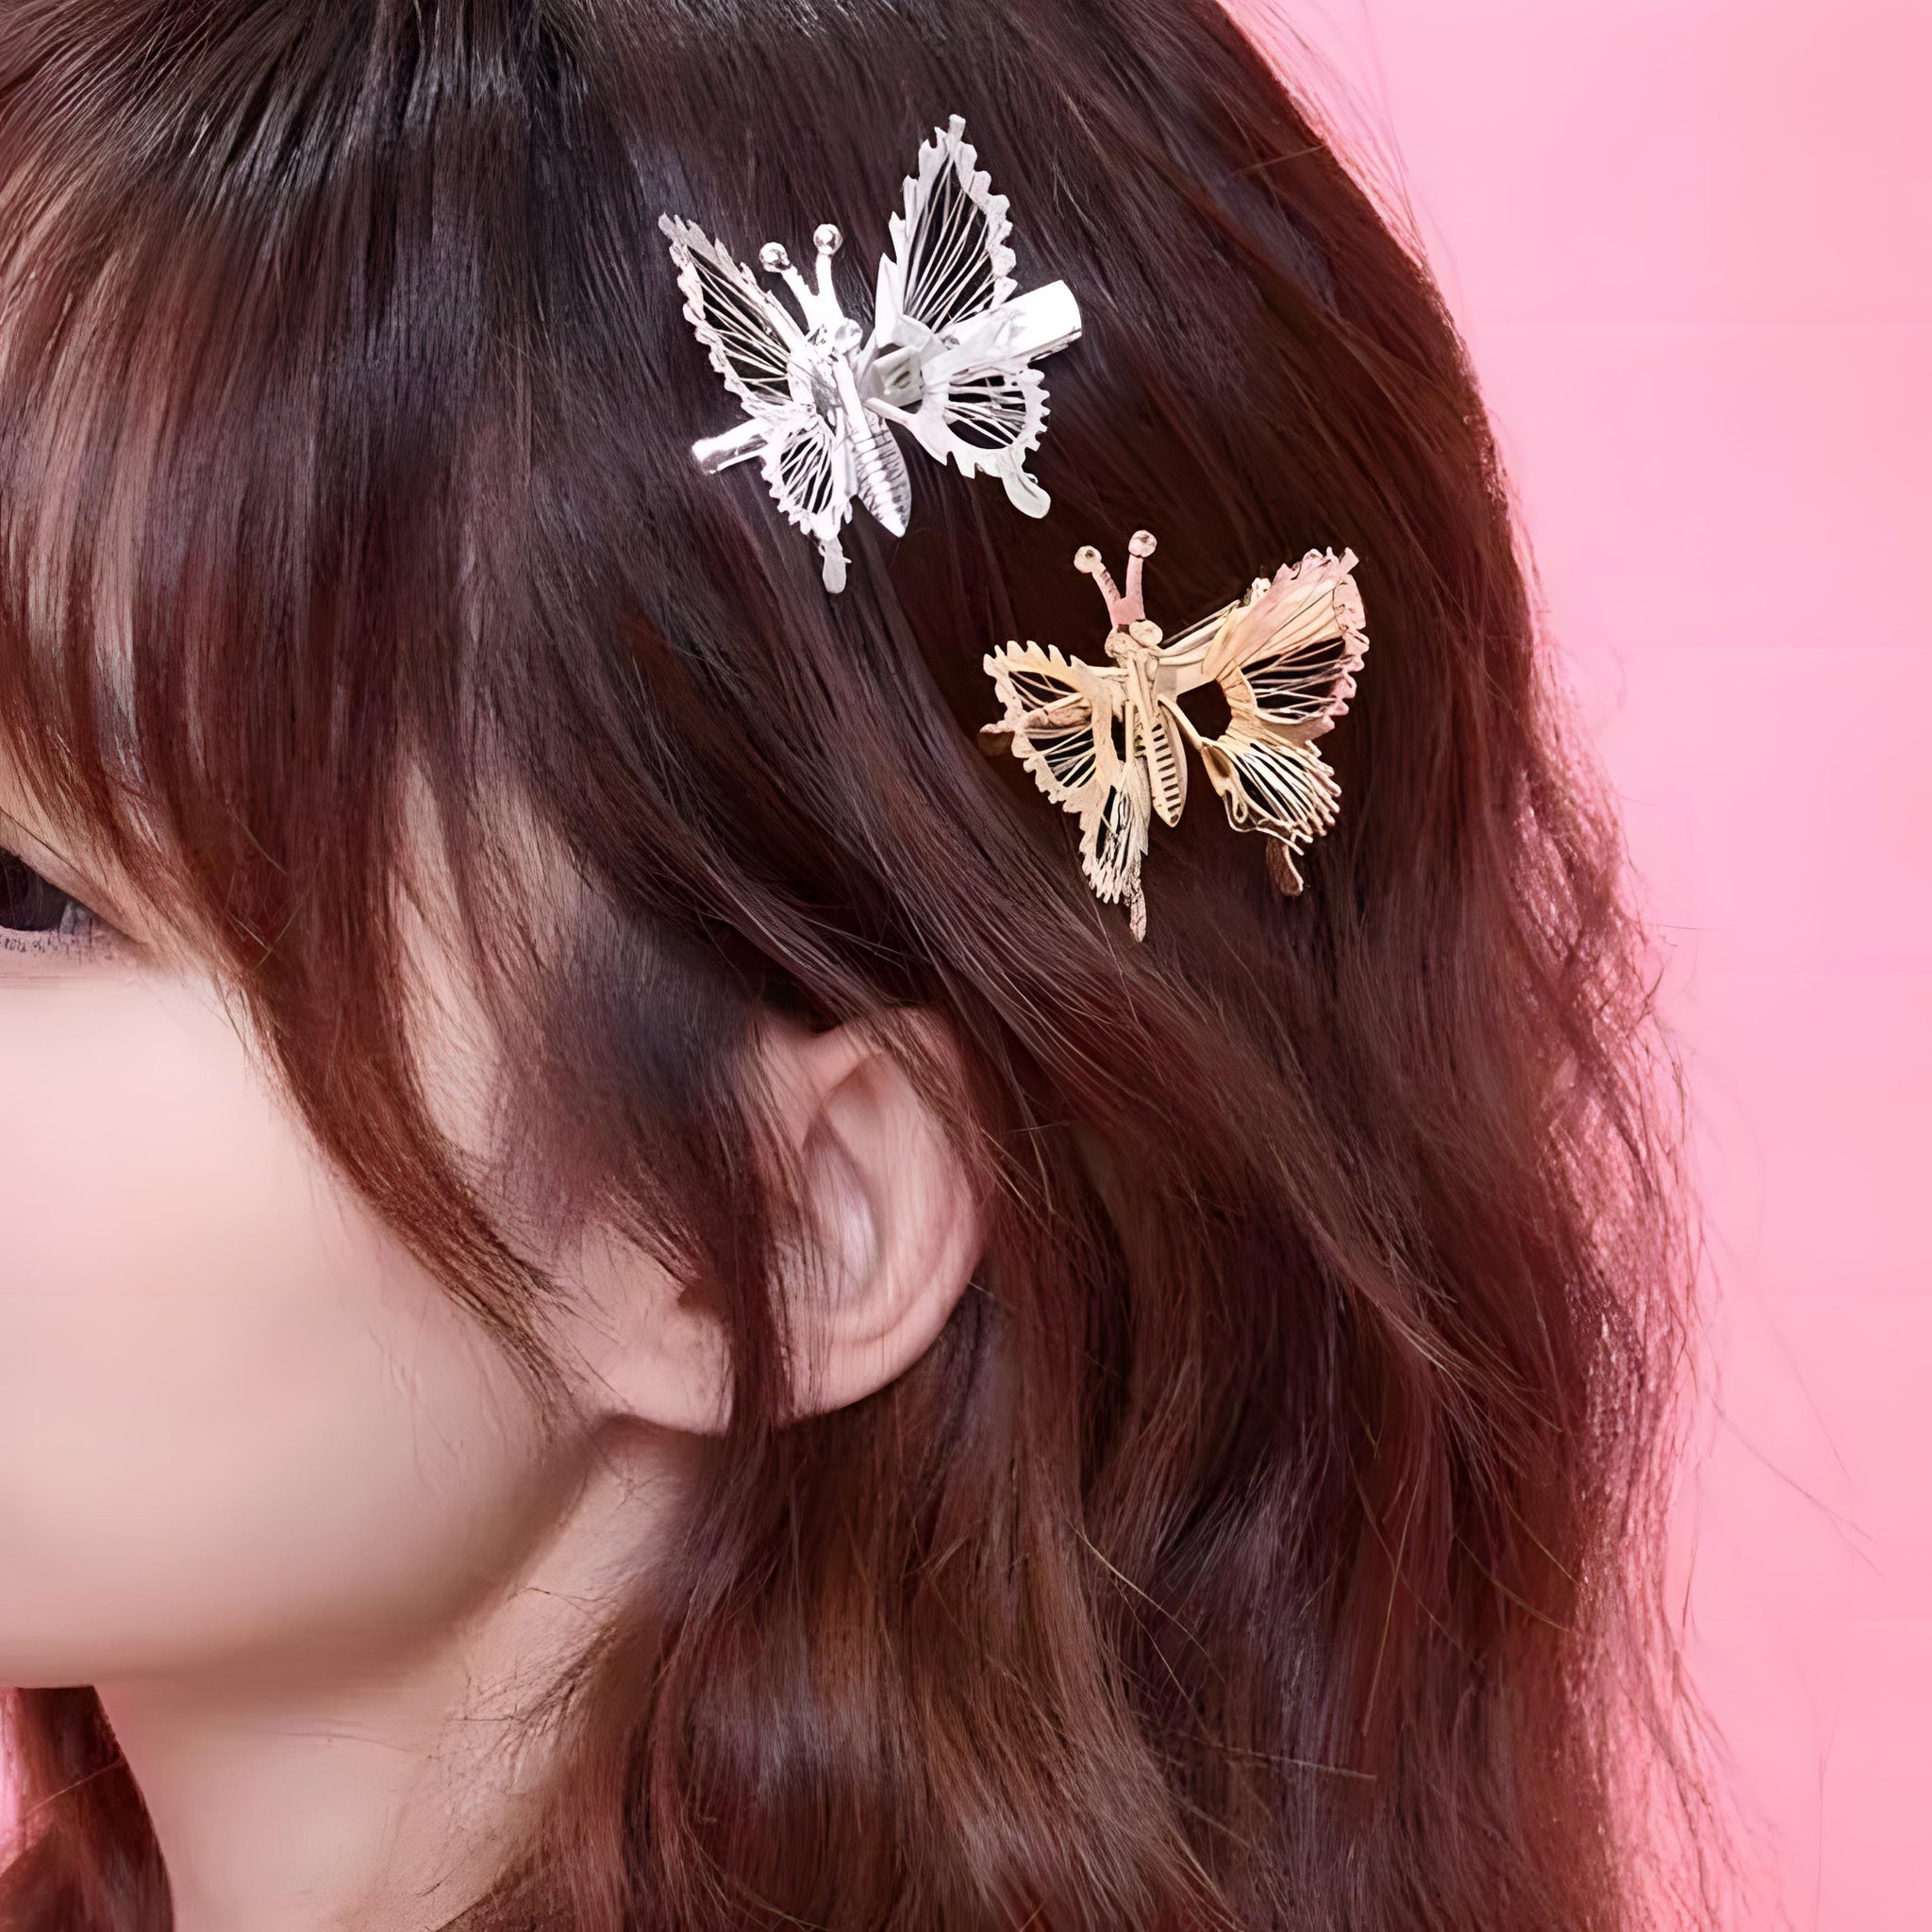 Moving Butterfly Hairpin Headdress